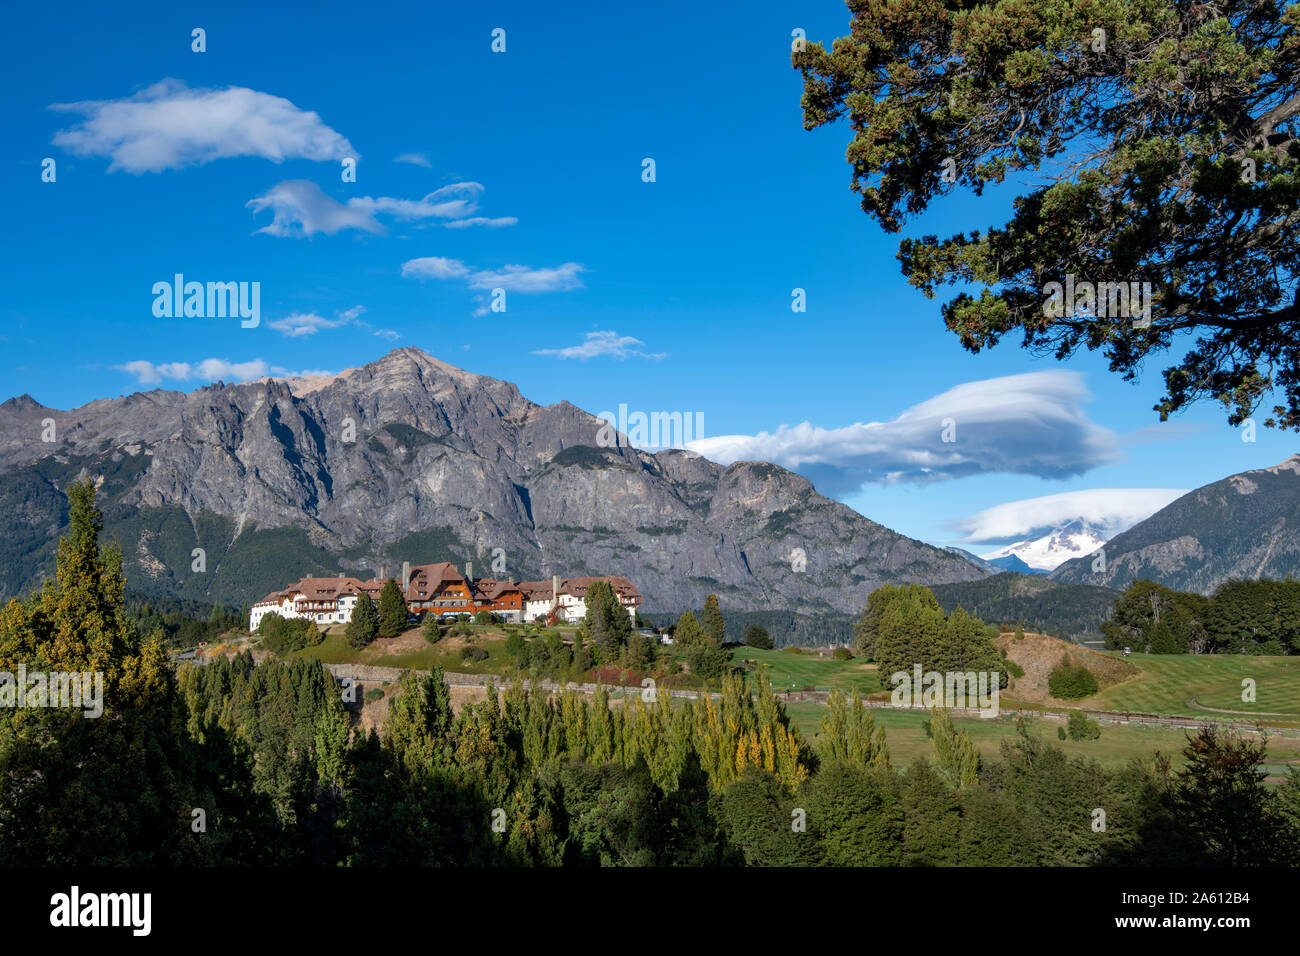 Llao Llao Hotel set against mountain backdrop, Bariloche, Patagonia, Argentina, South America Stock Photo